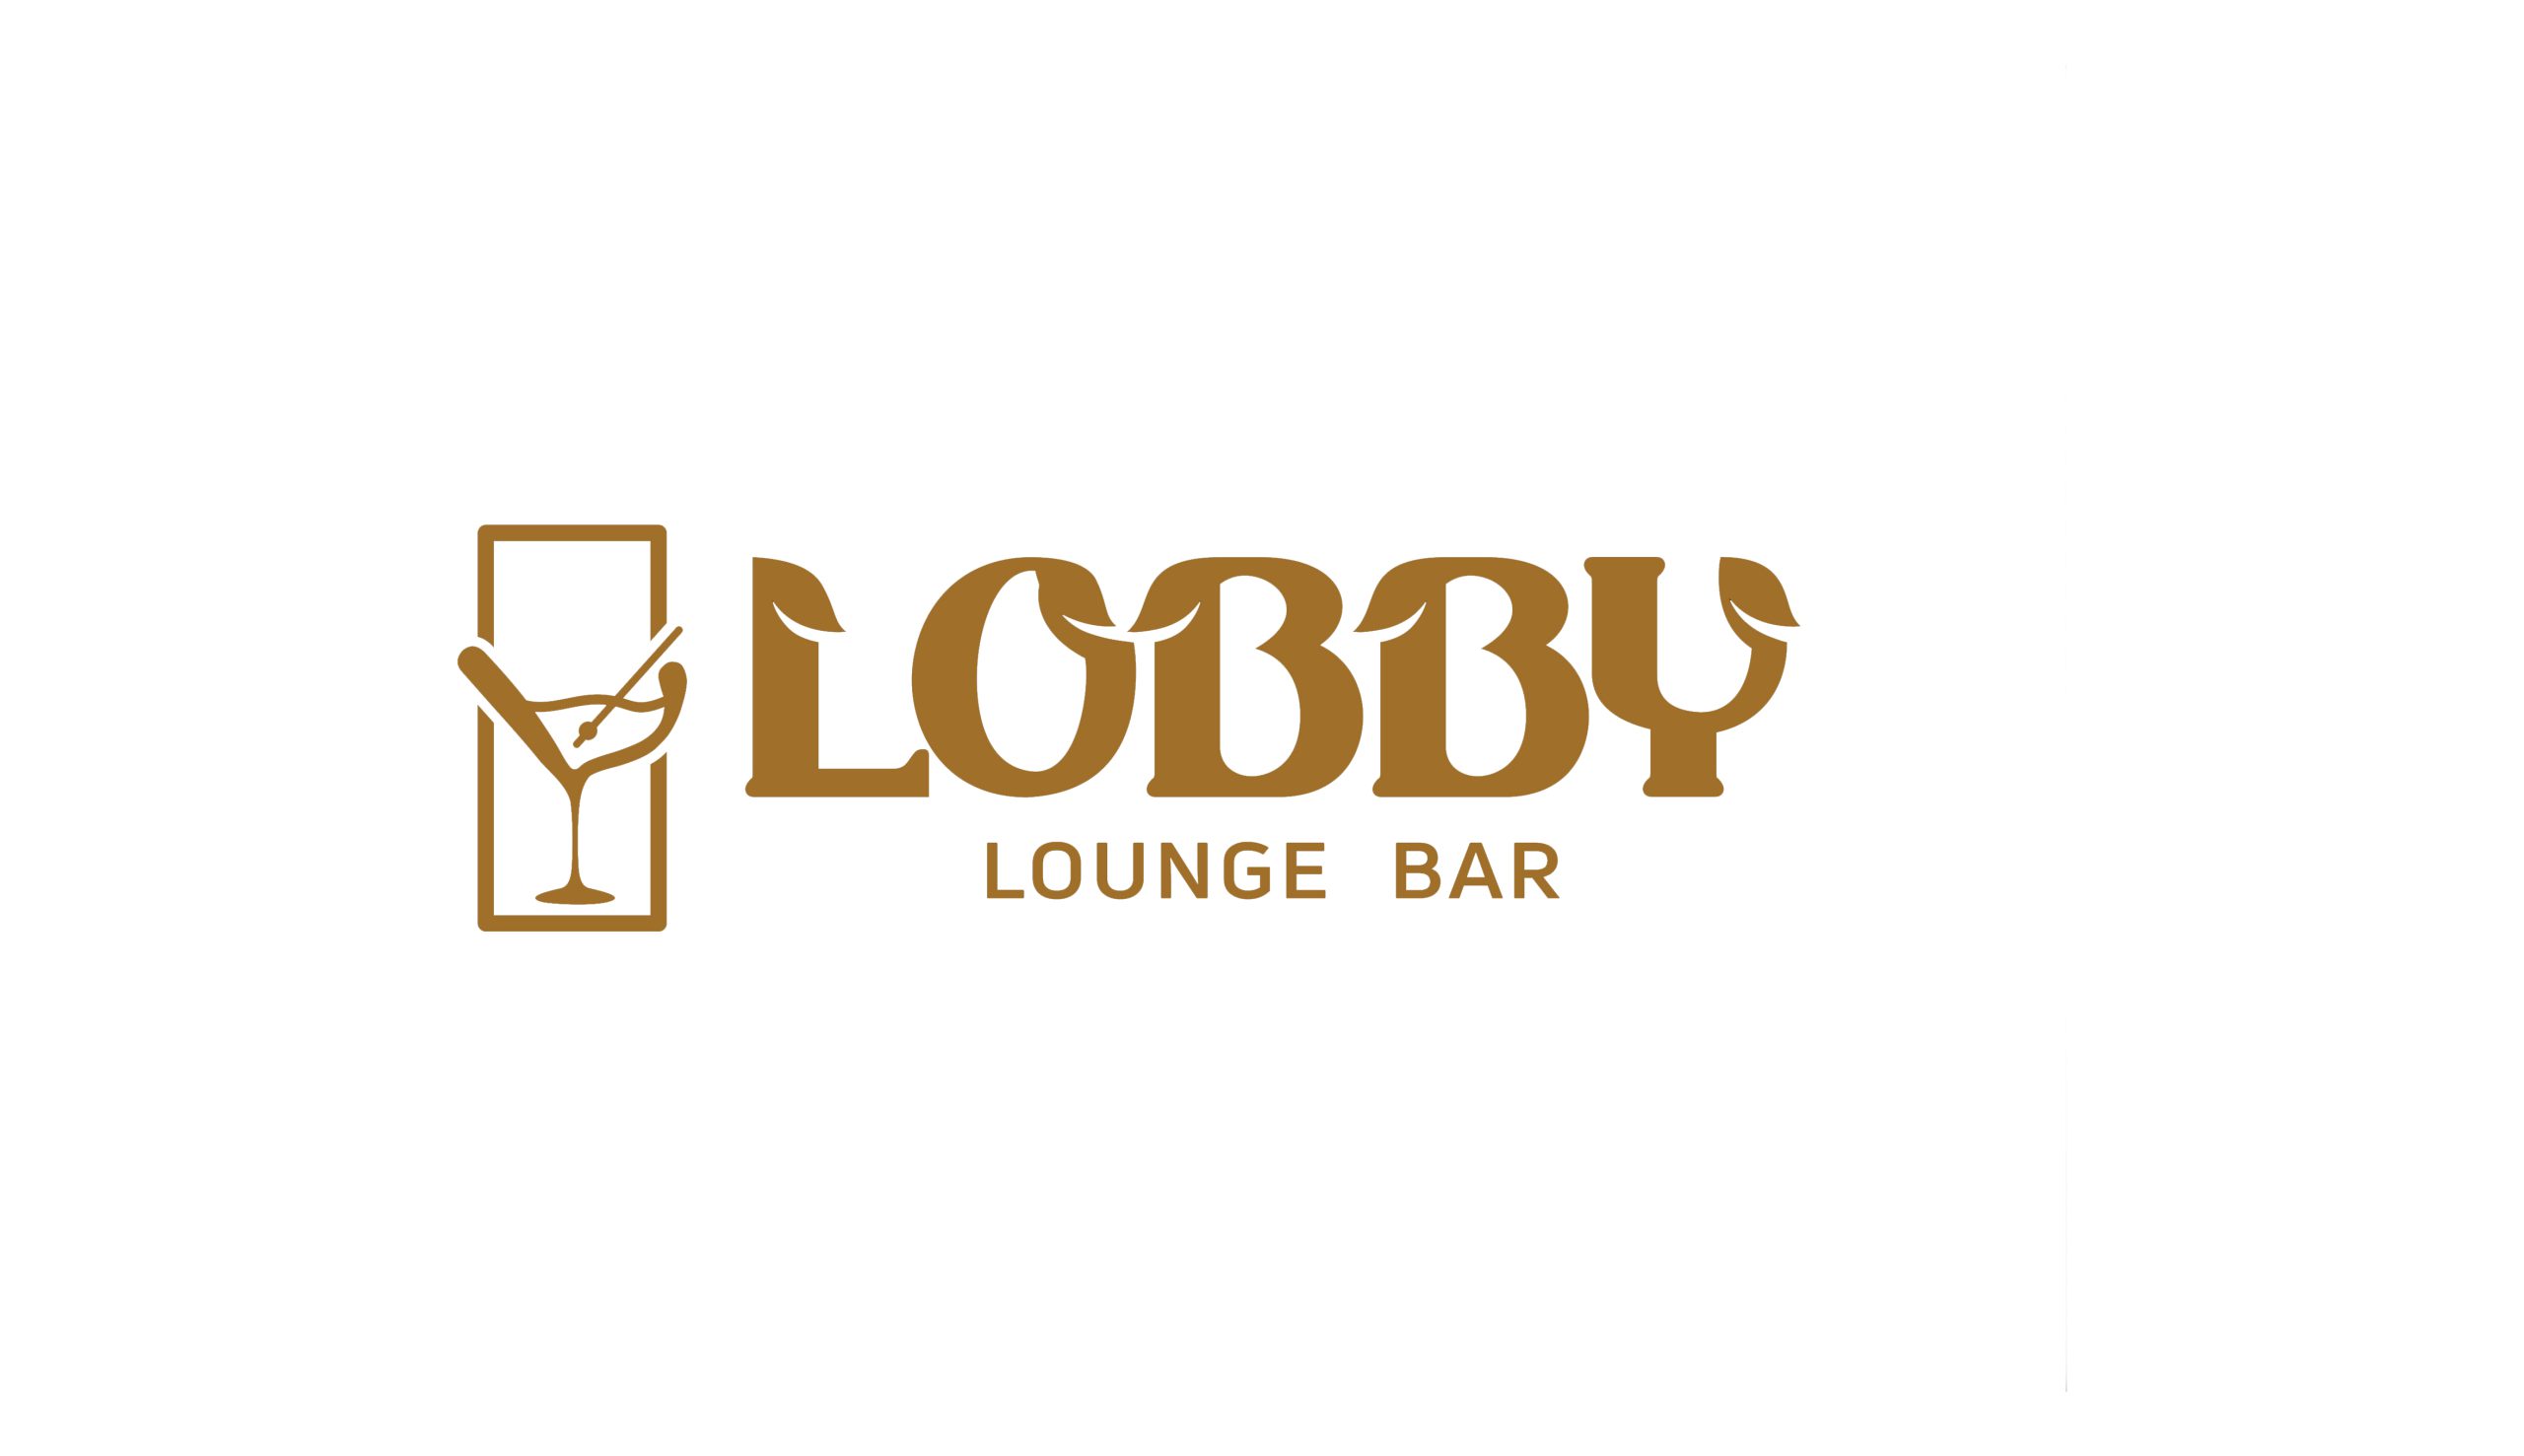 LOBBY lounge bar